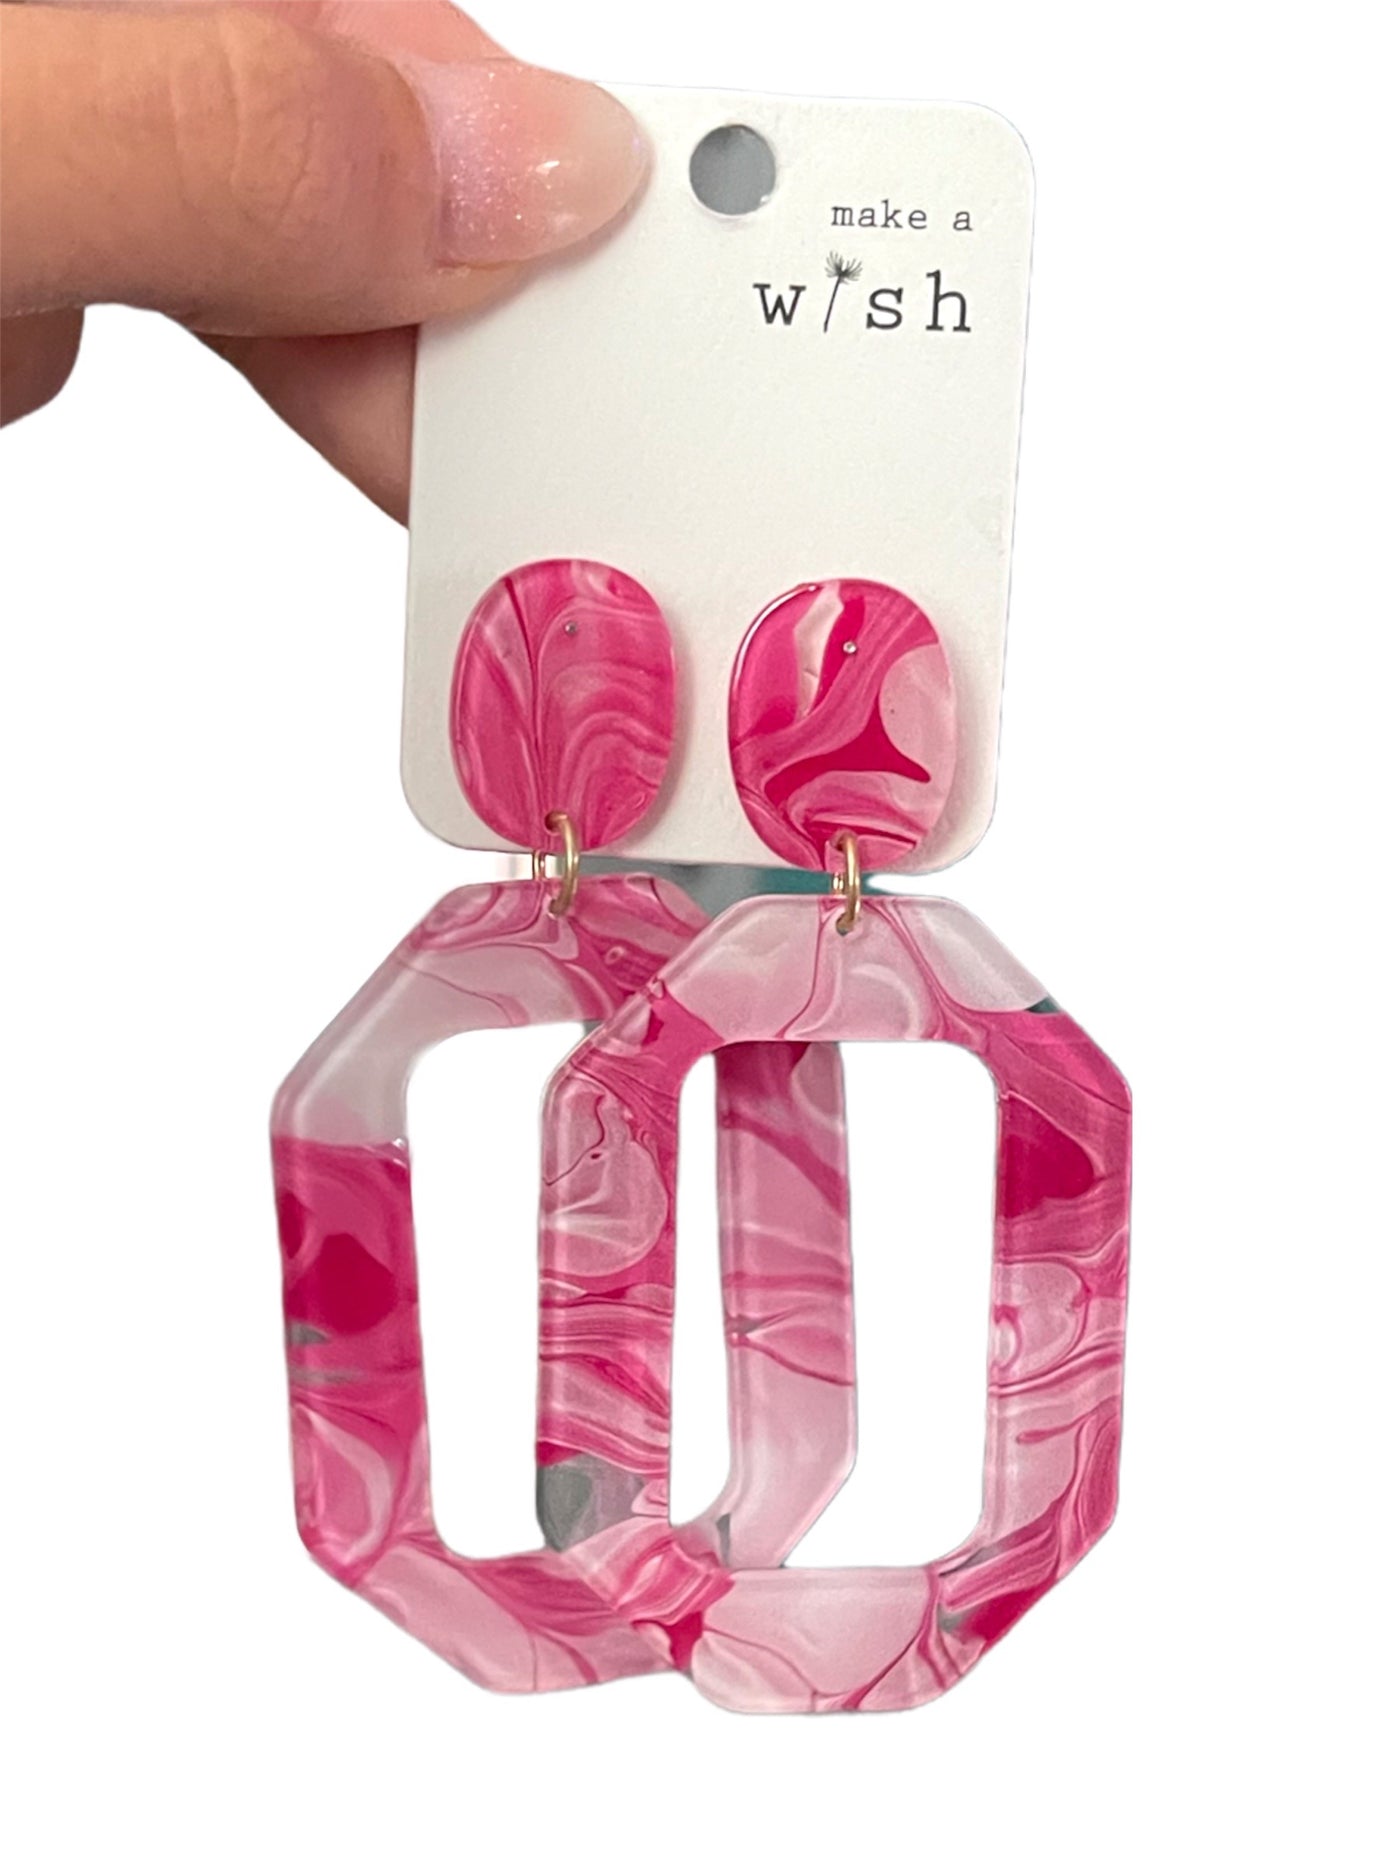 Pink Mix Resin Earrings